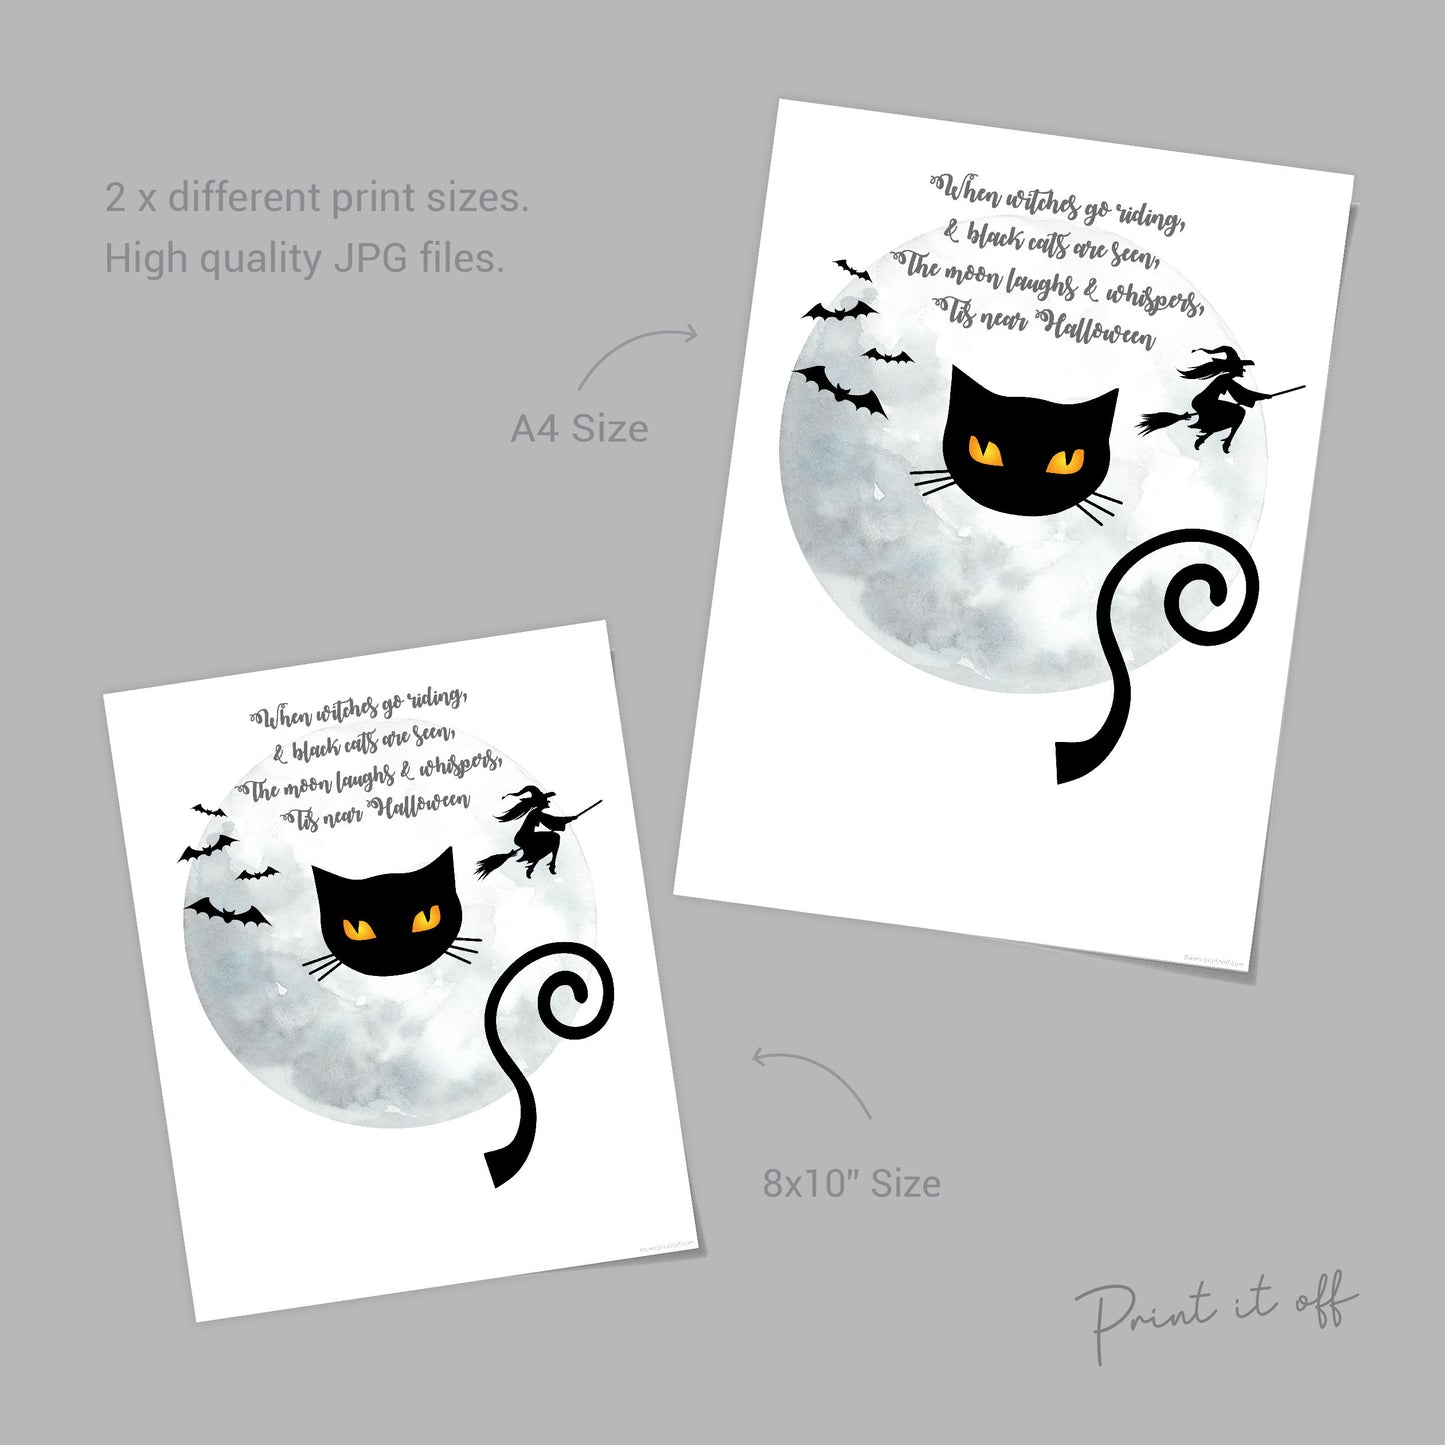 Halloween Footprint Handprint Art Craft / Black Cat Witch Poem / Kids Toddler Baby Card Memory Activity Keepsake DIY / Print It Off  0582